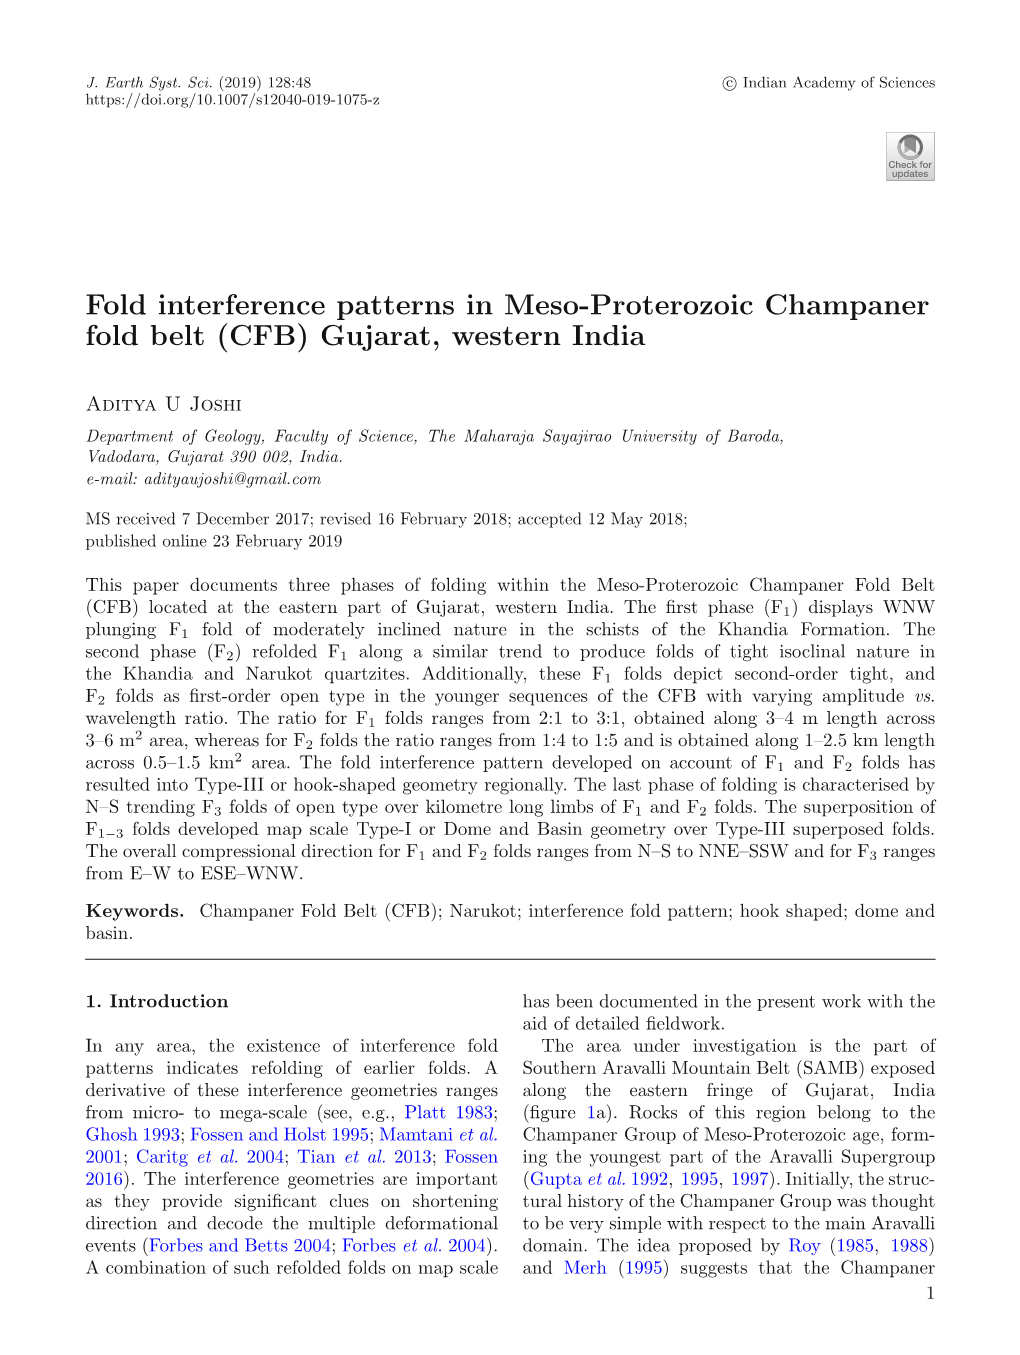 Fold Interference Patterns in Meso-Proterozoic Champaner Fold Belt (CFB) Gujarat, Western India